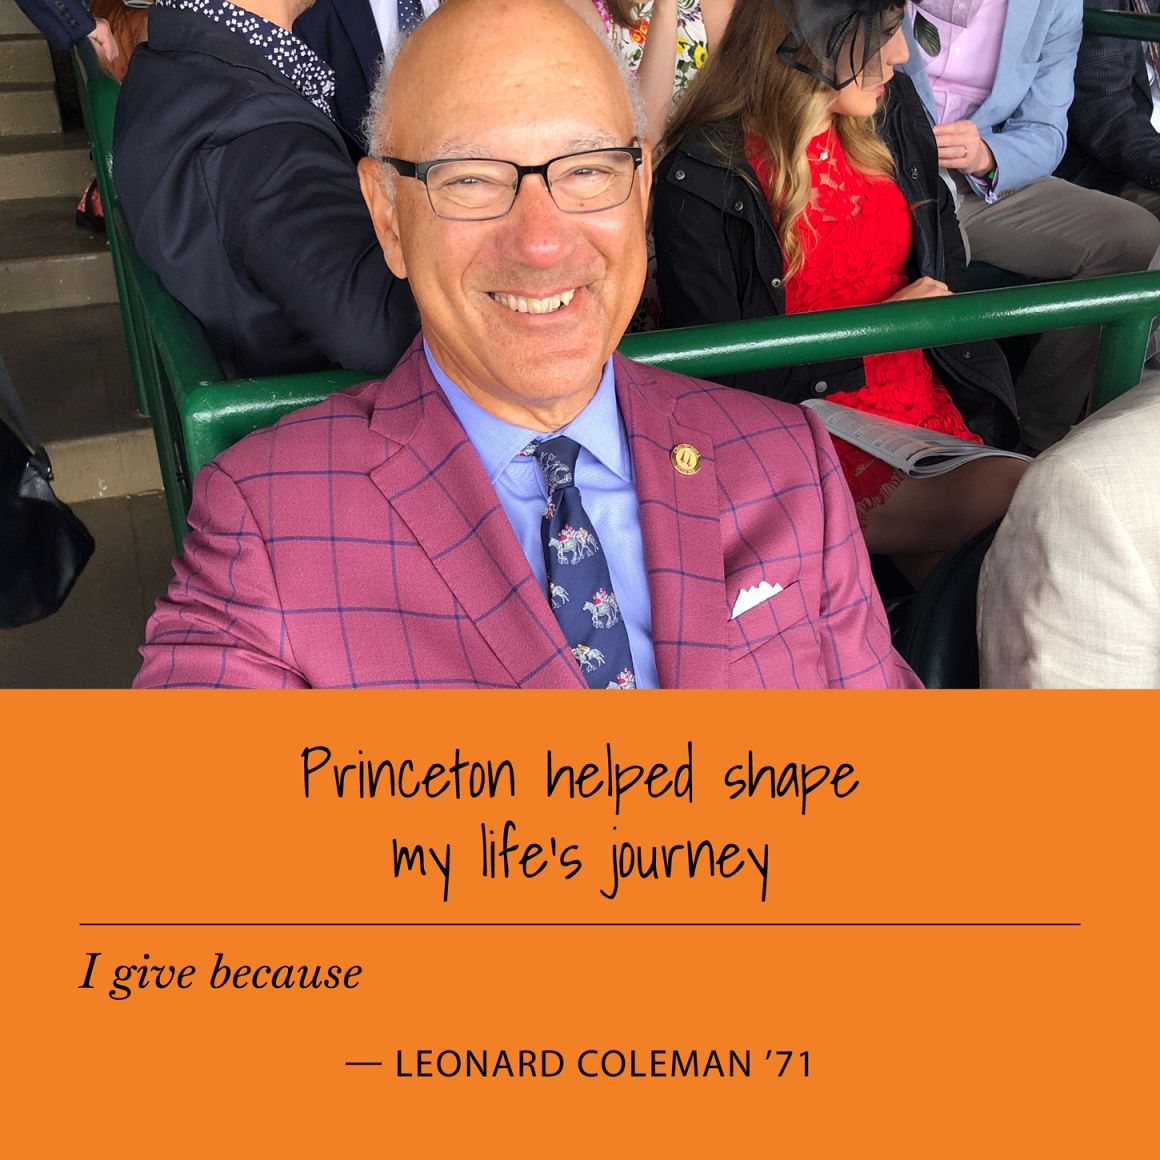 "I give because Princeton helped shape my life's journey." Leonard Coleman '71